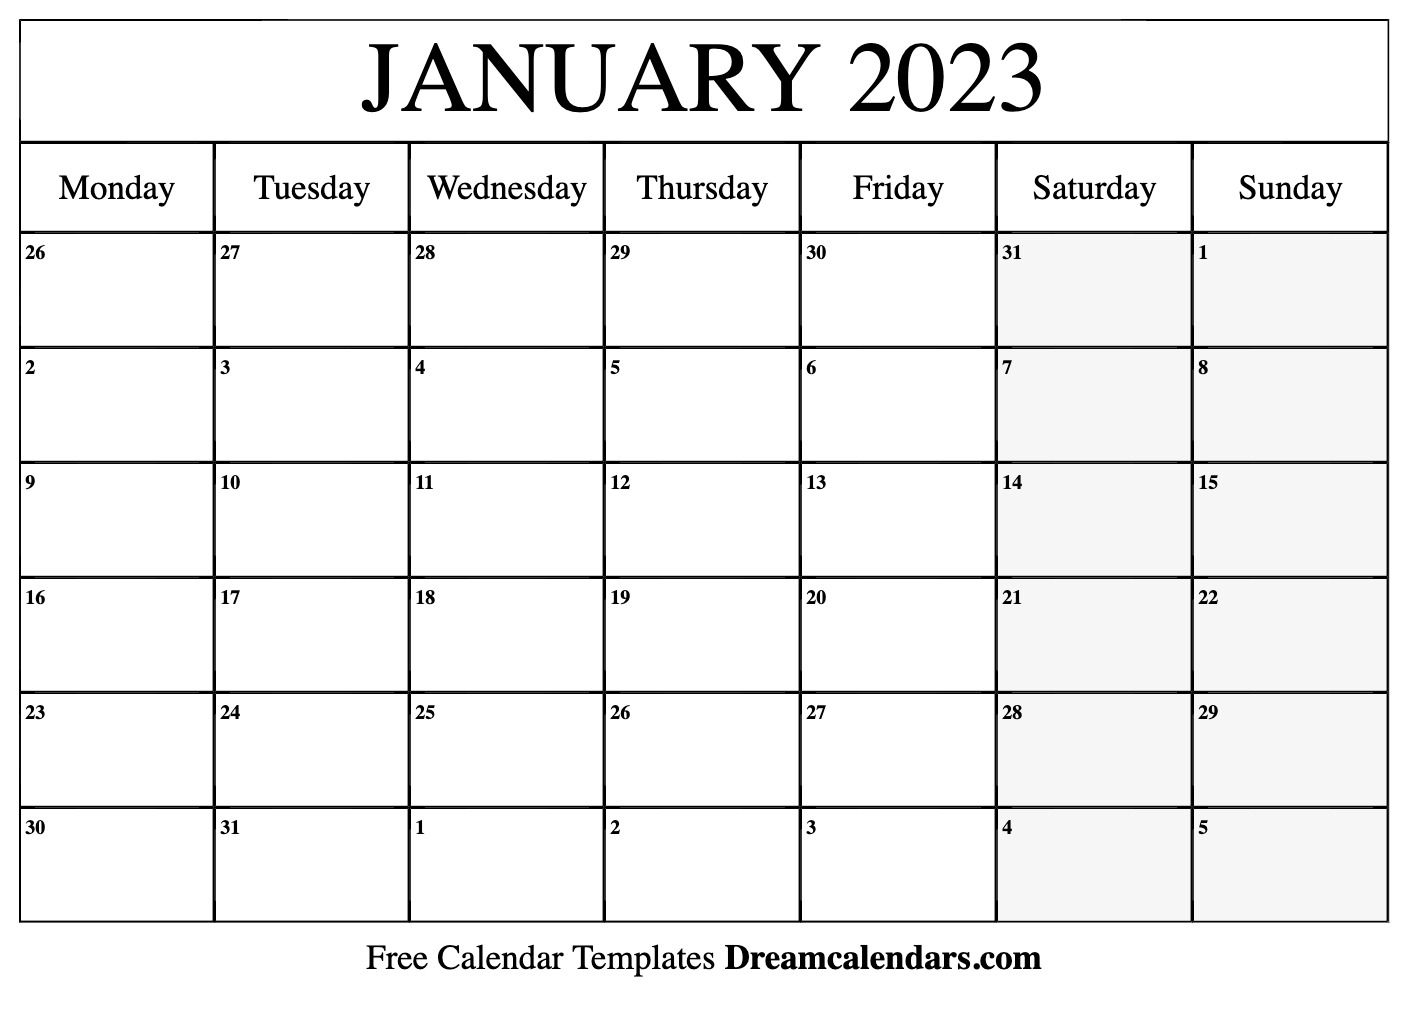 january-2023-calendar-free-blank-printable-with-holidays